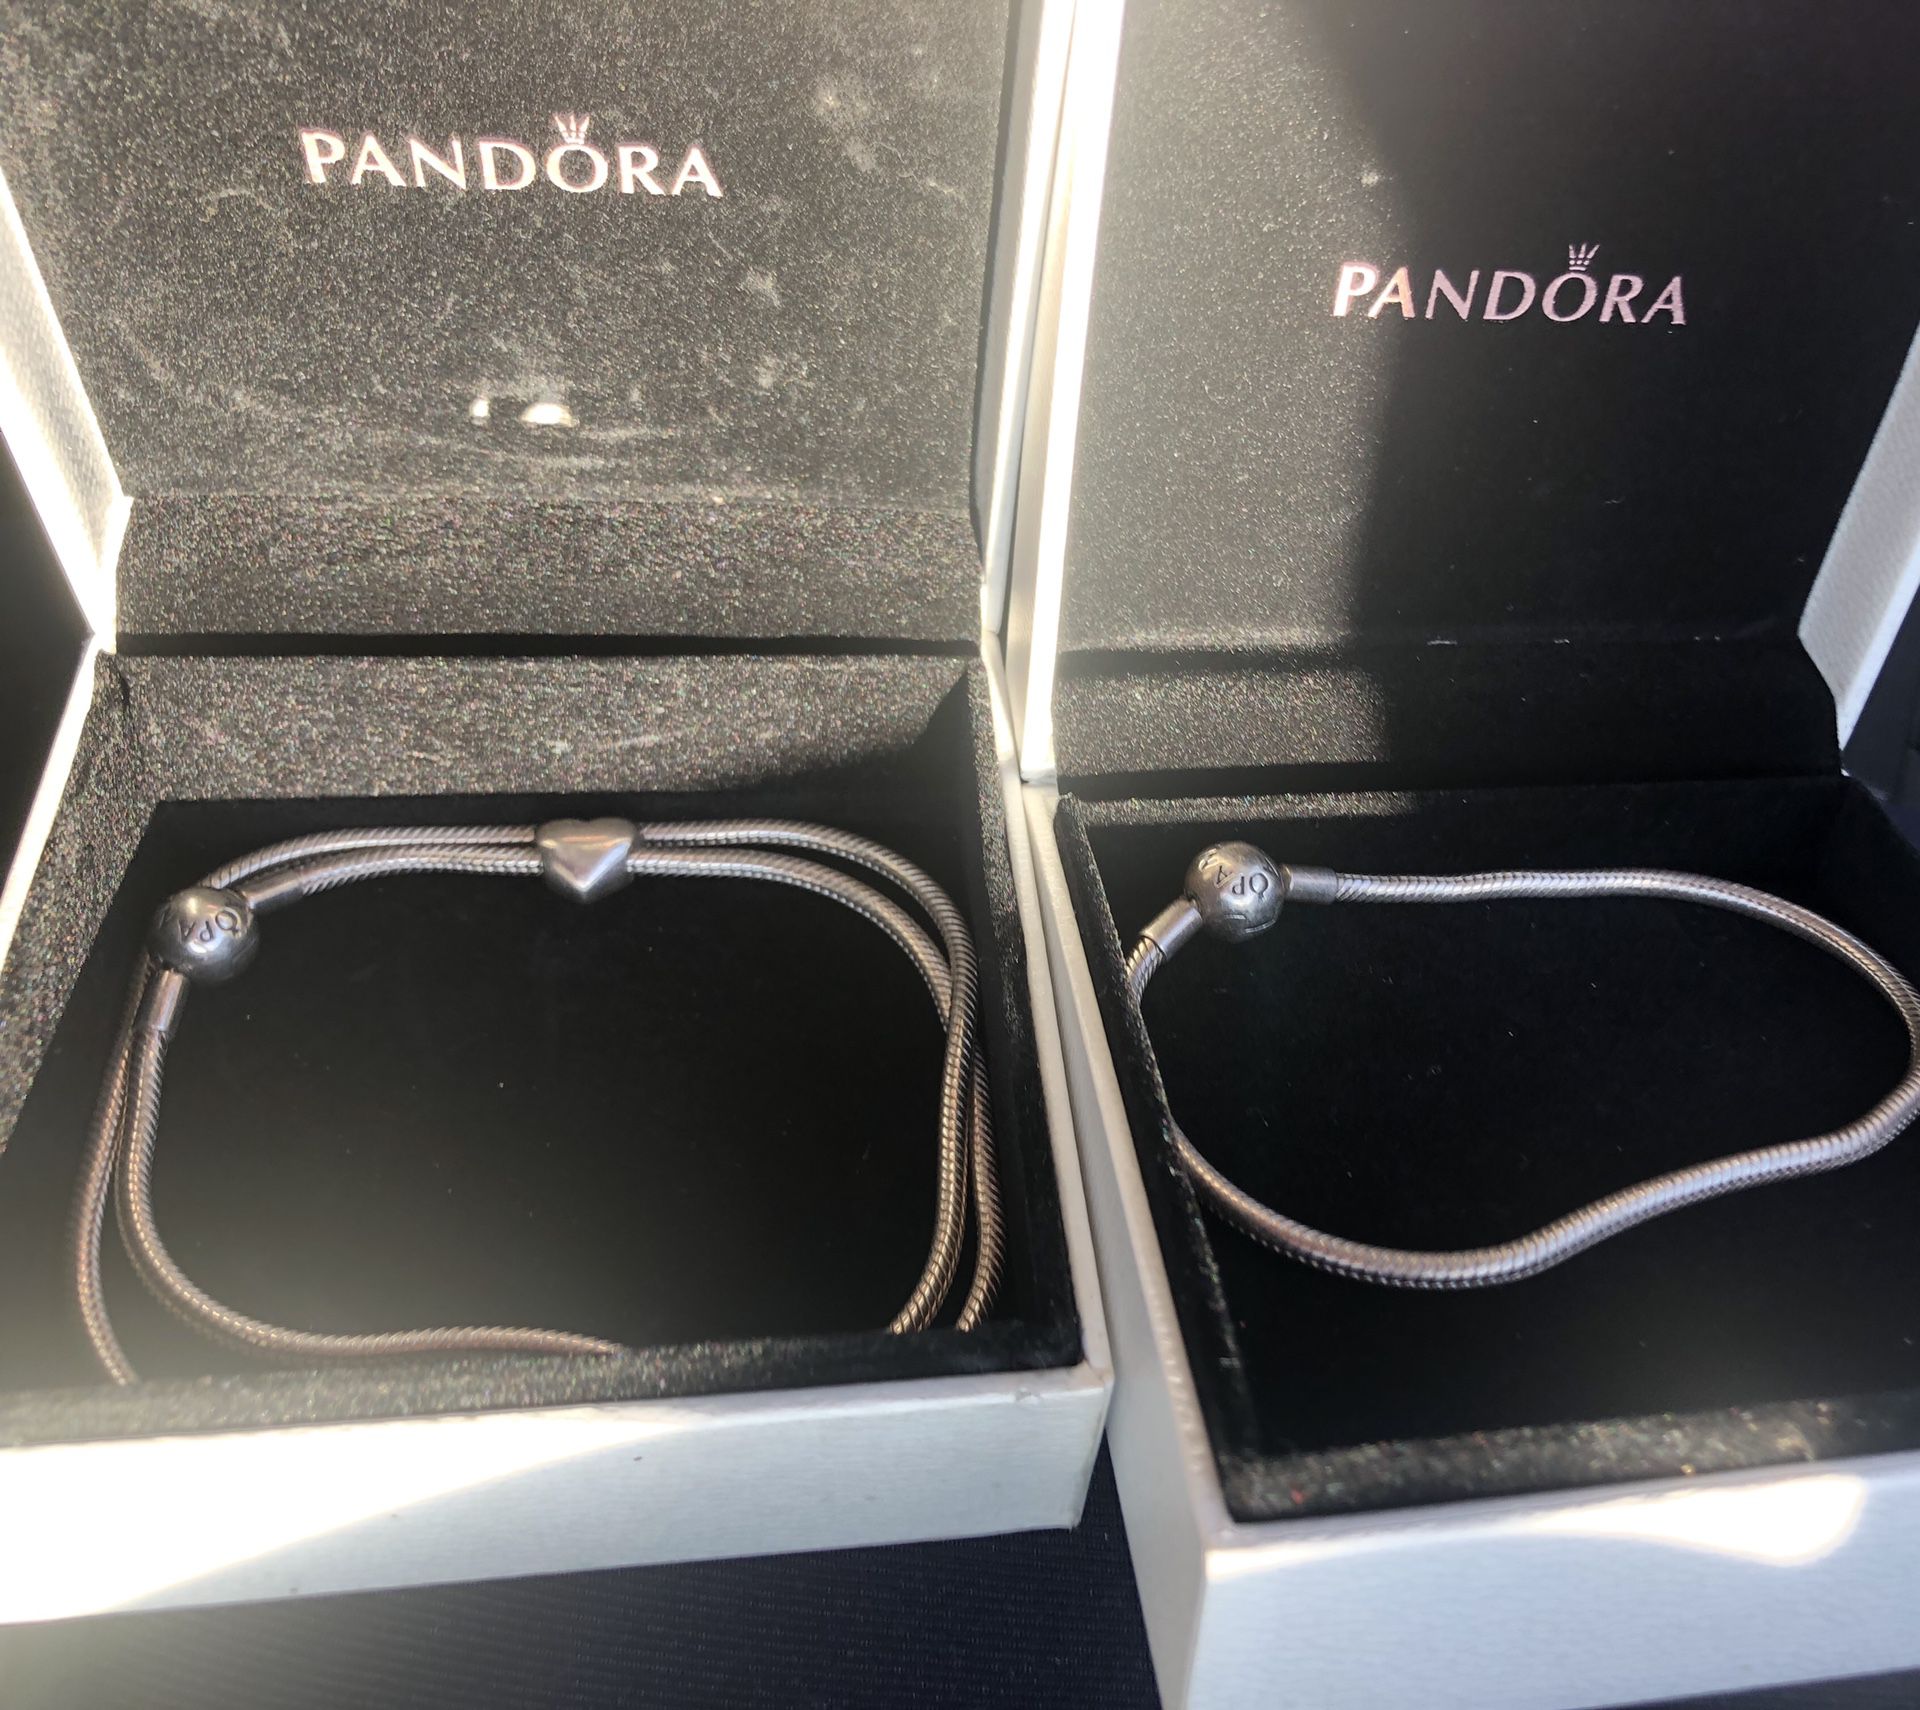 Pandora Necklace W/ 1 Heart Charm & Pandora Bracelet! $150 Only For Both